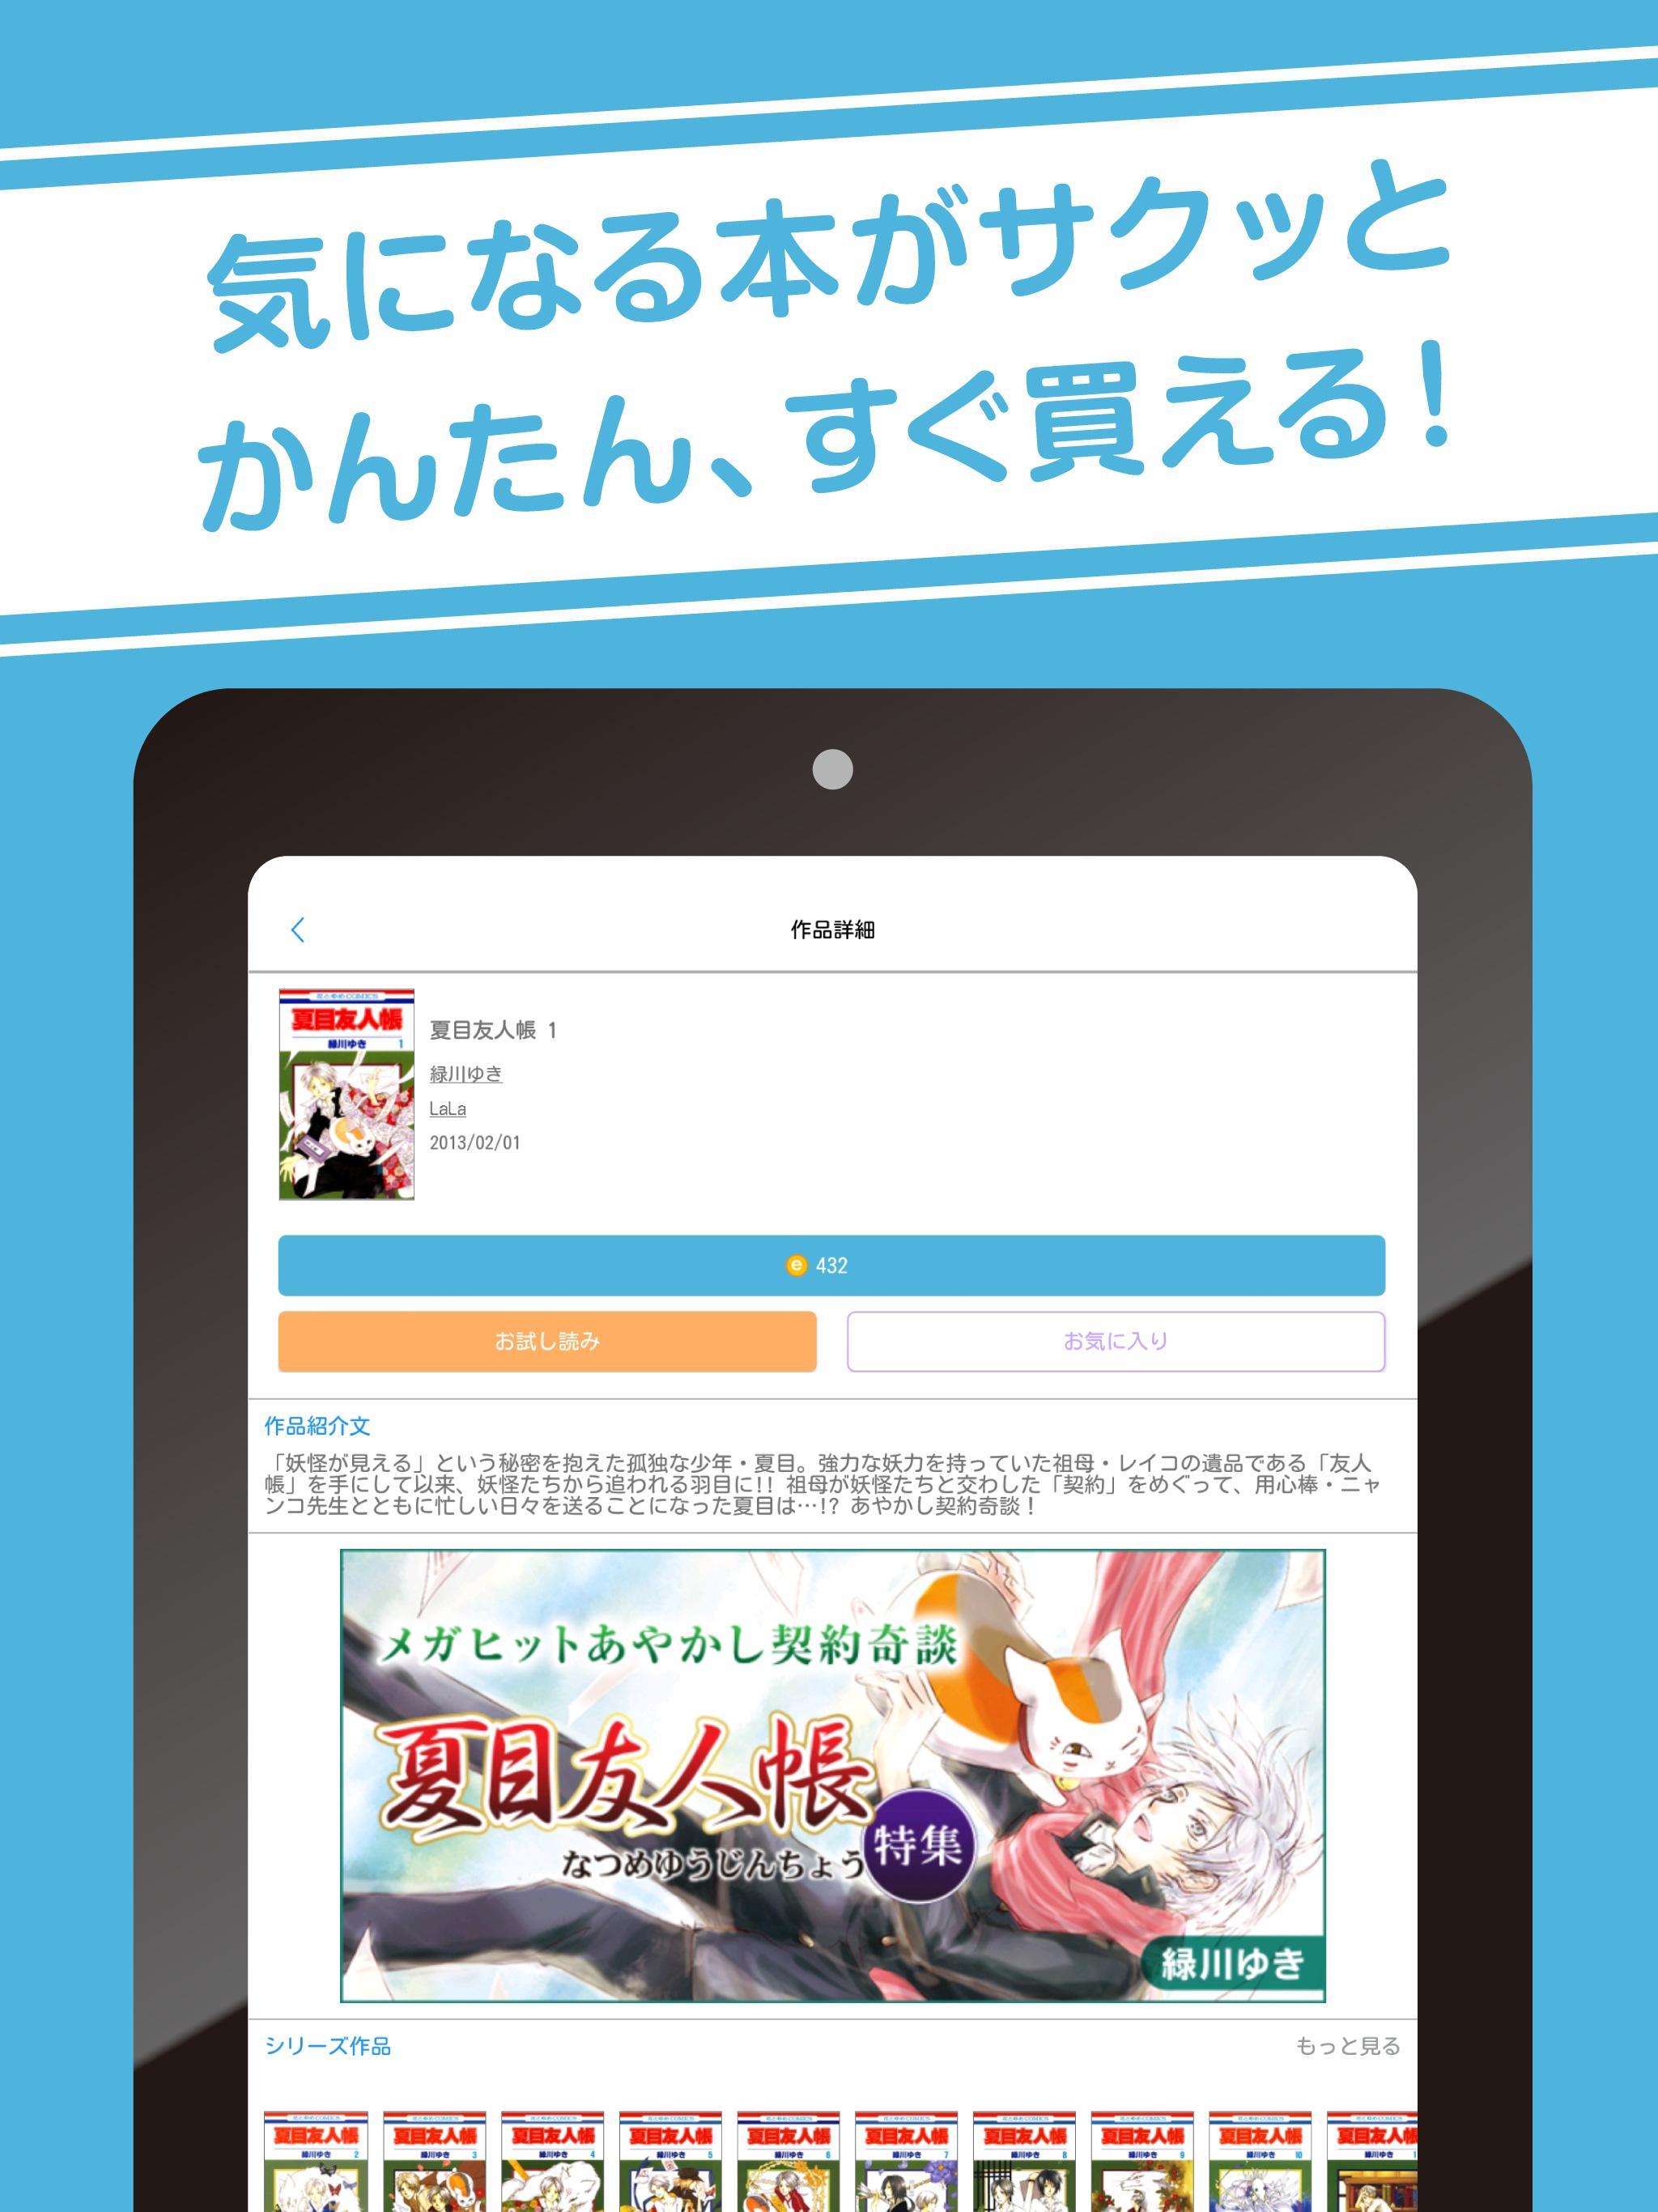 白泉社e-net! 2.2.11 Screenshot 7